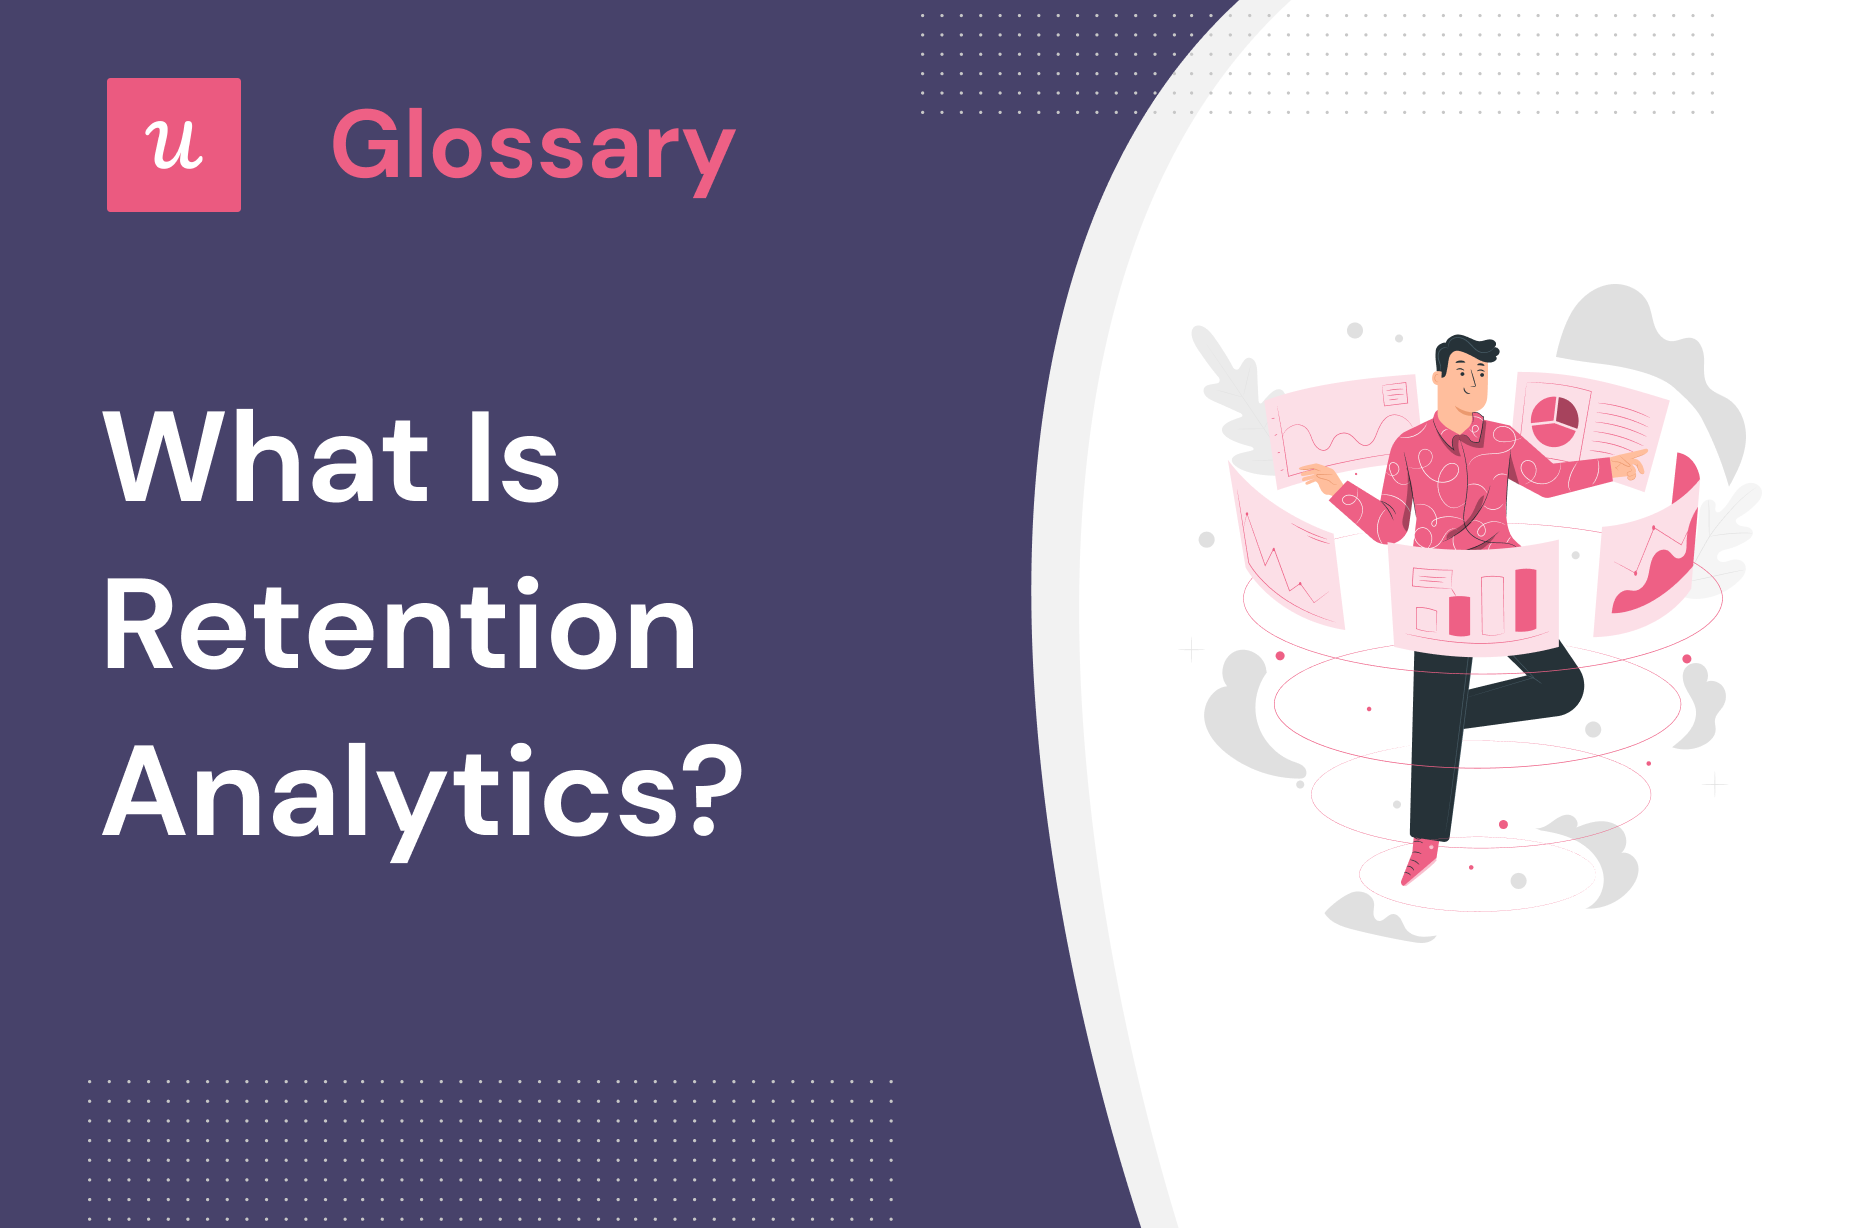 What is Retention Analytics?